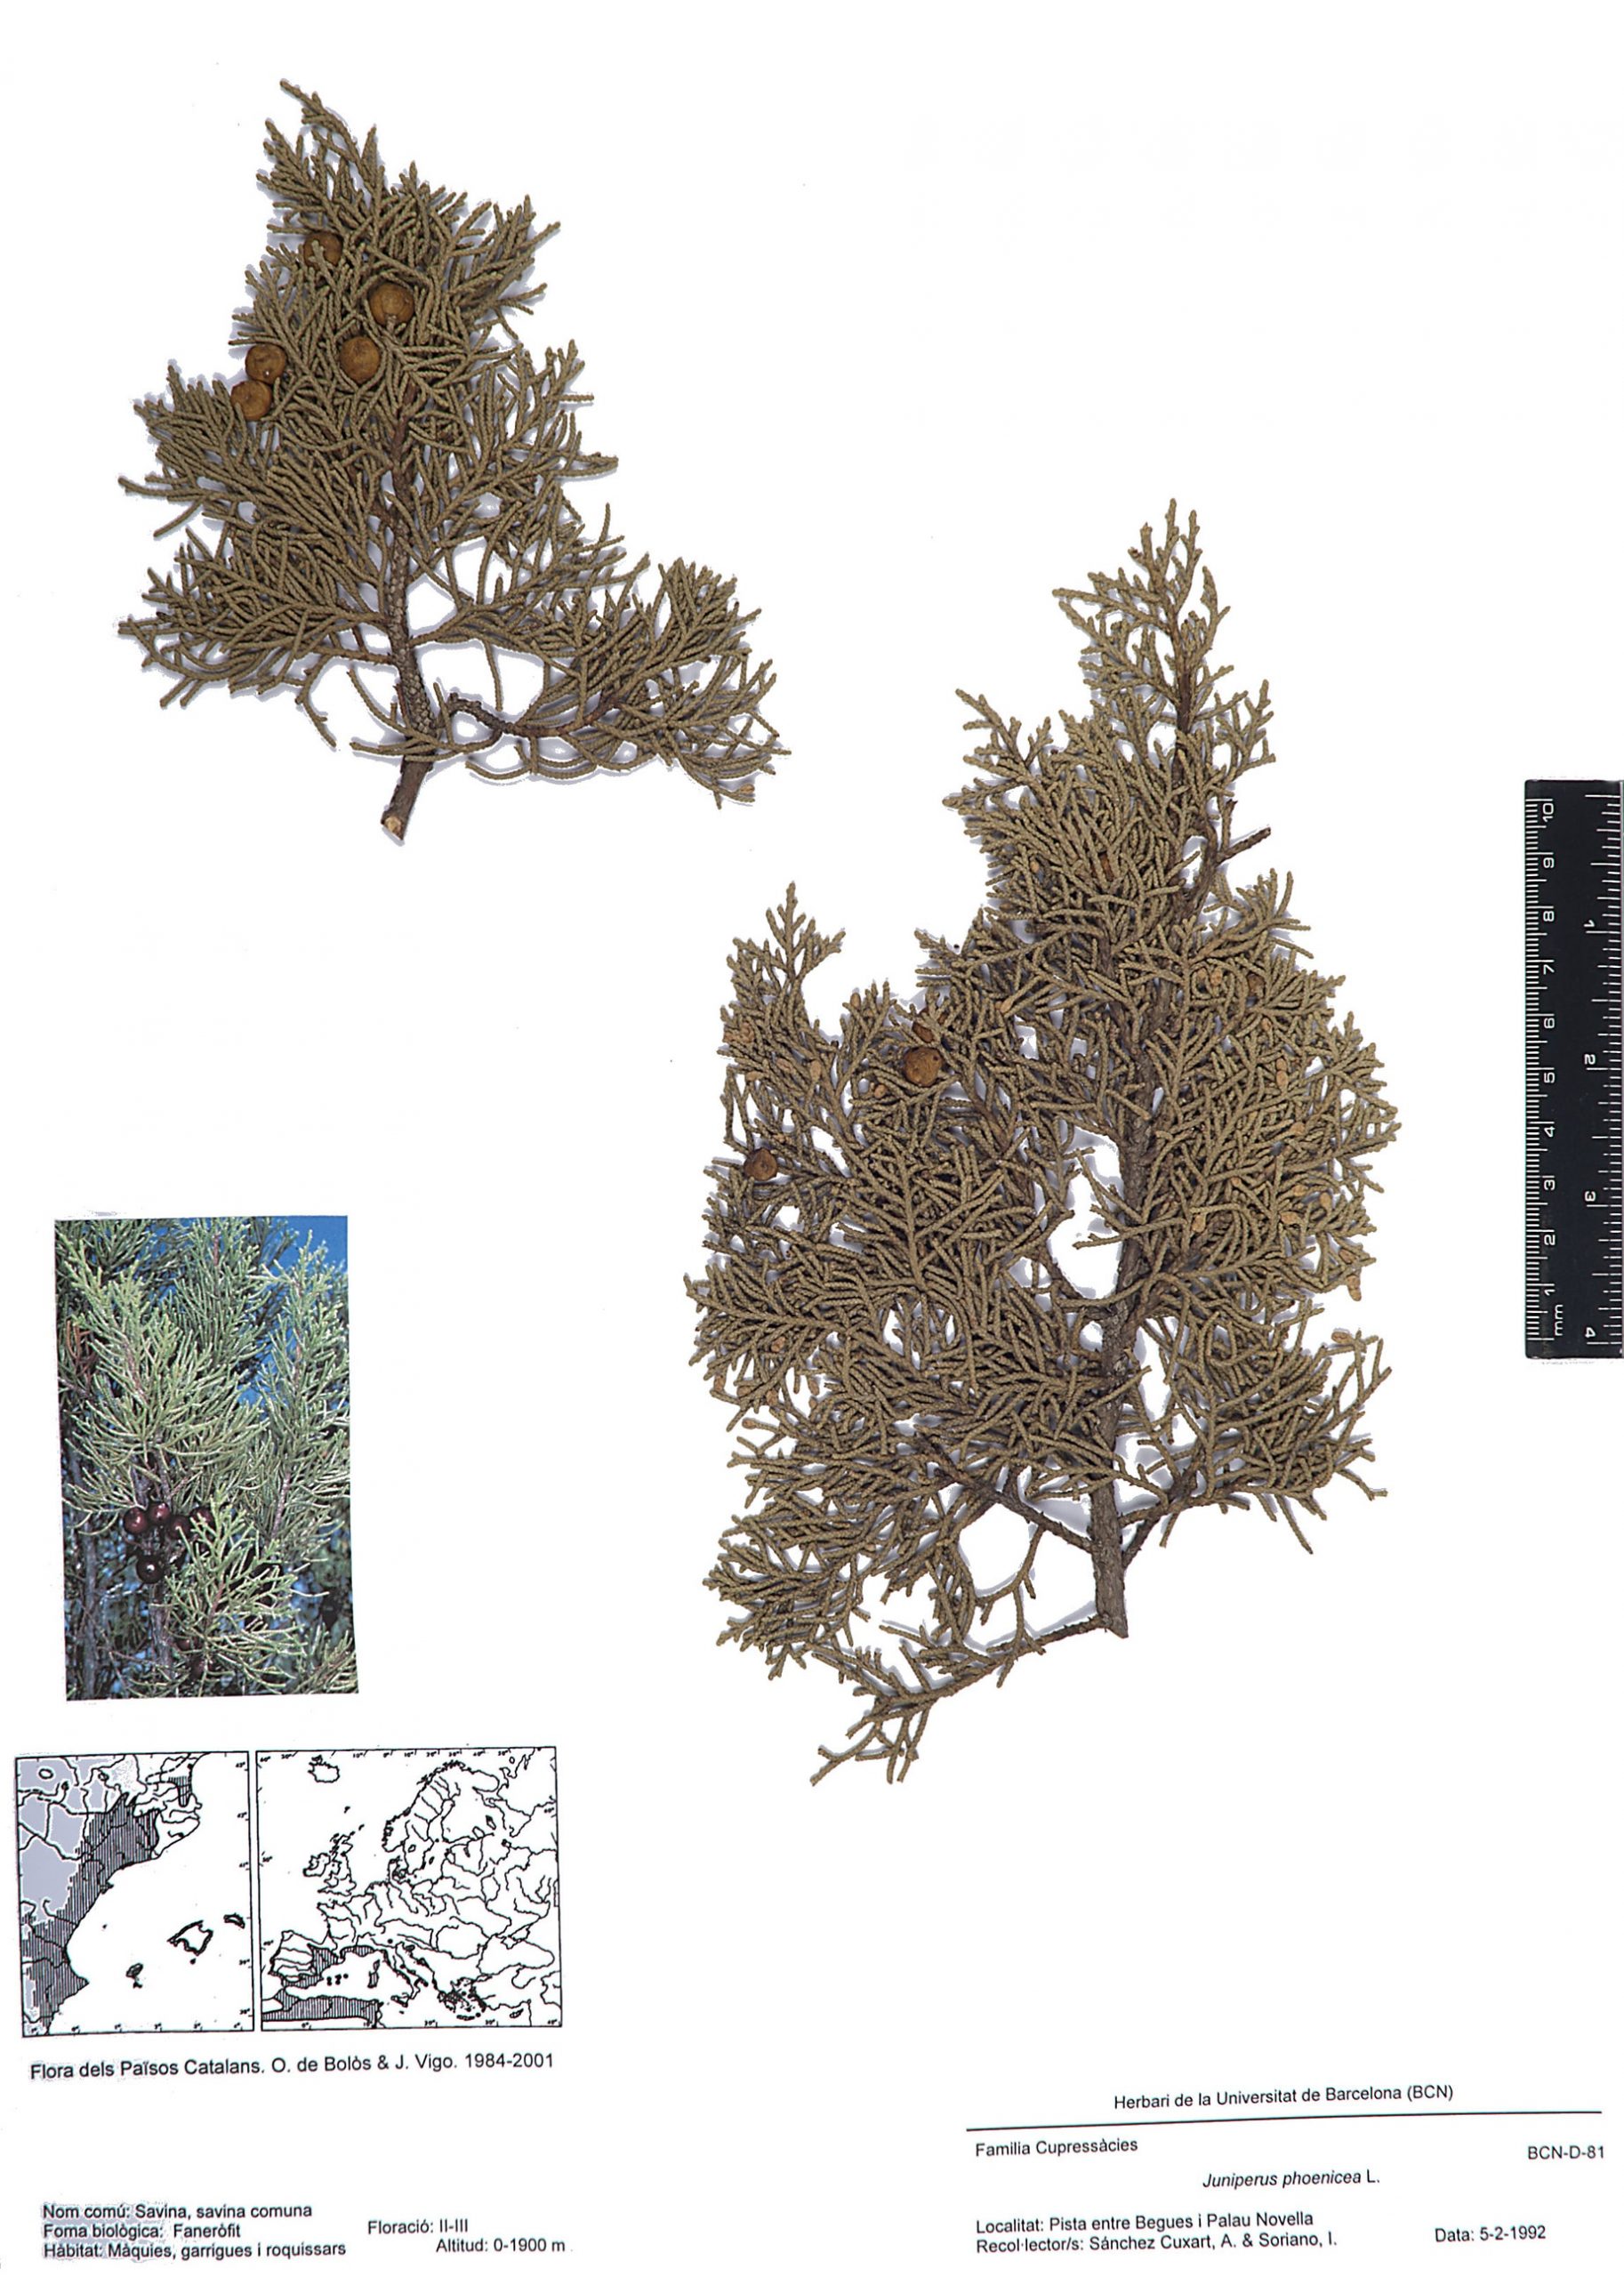 Juniperus phoenicea L. (Savina, savina comuna)